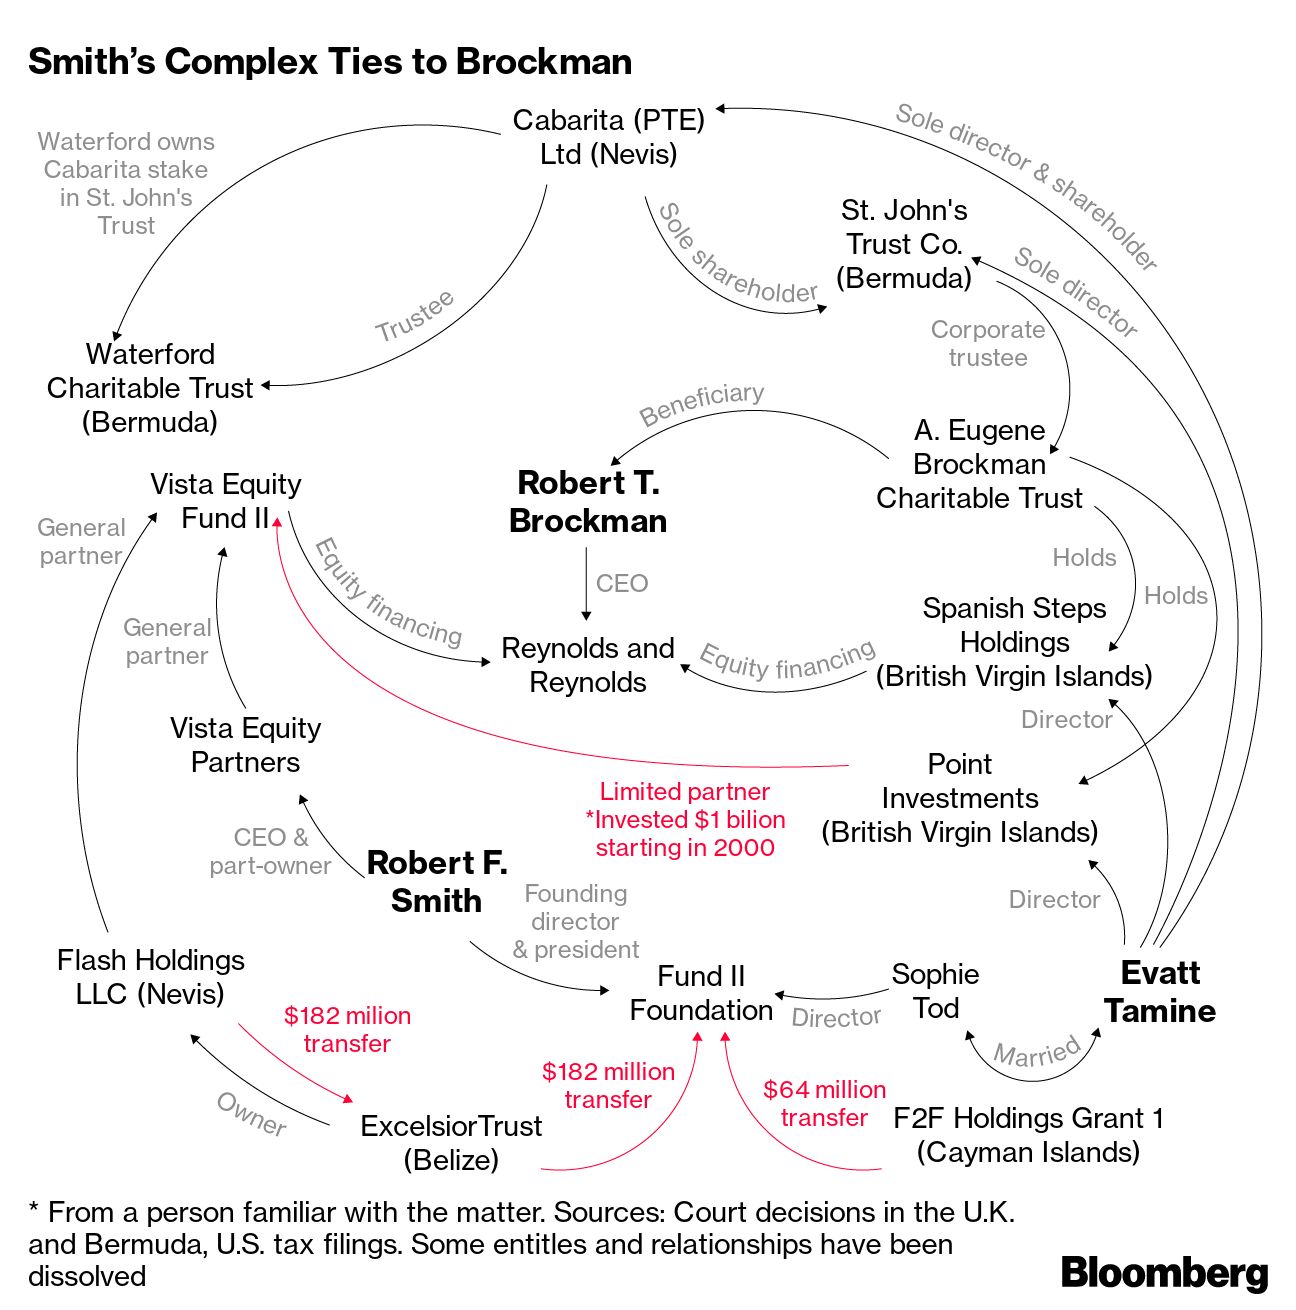 Smith and Brockman tax ties